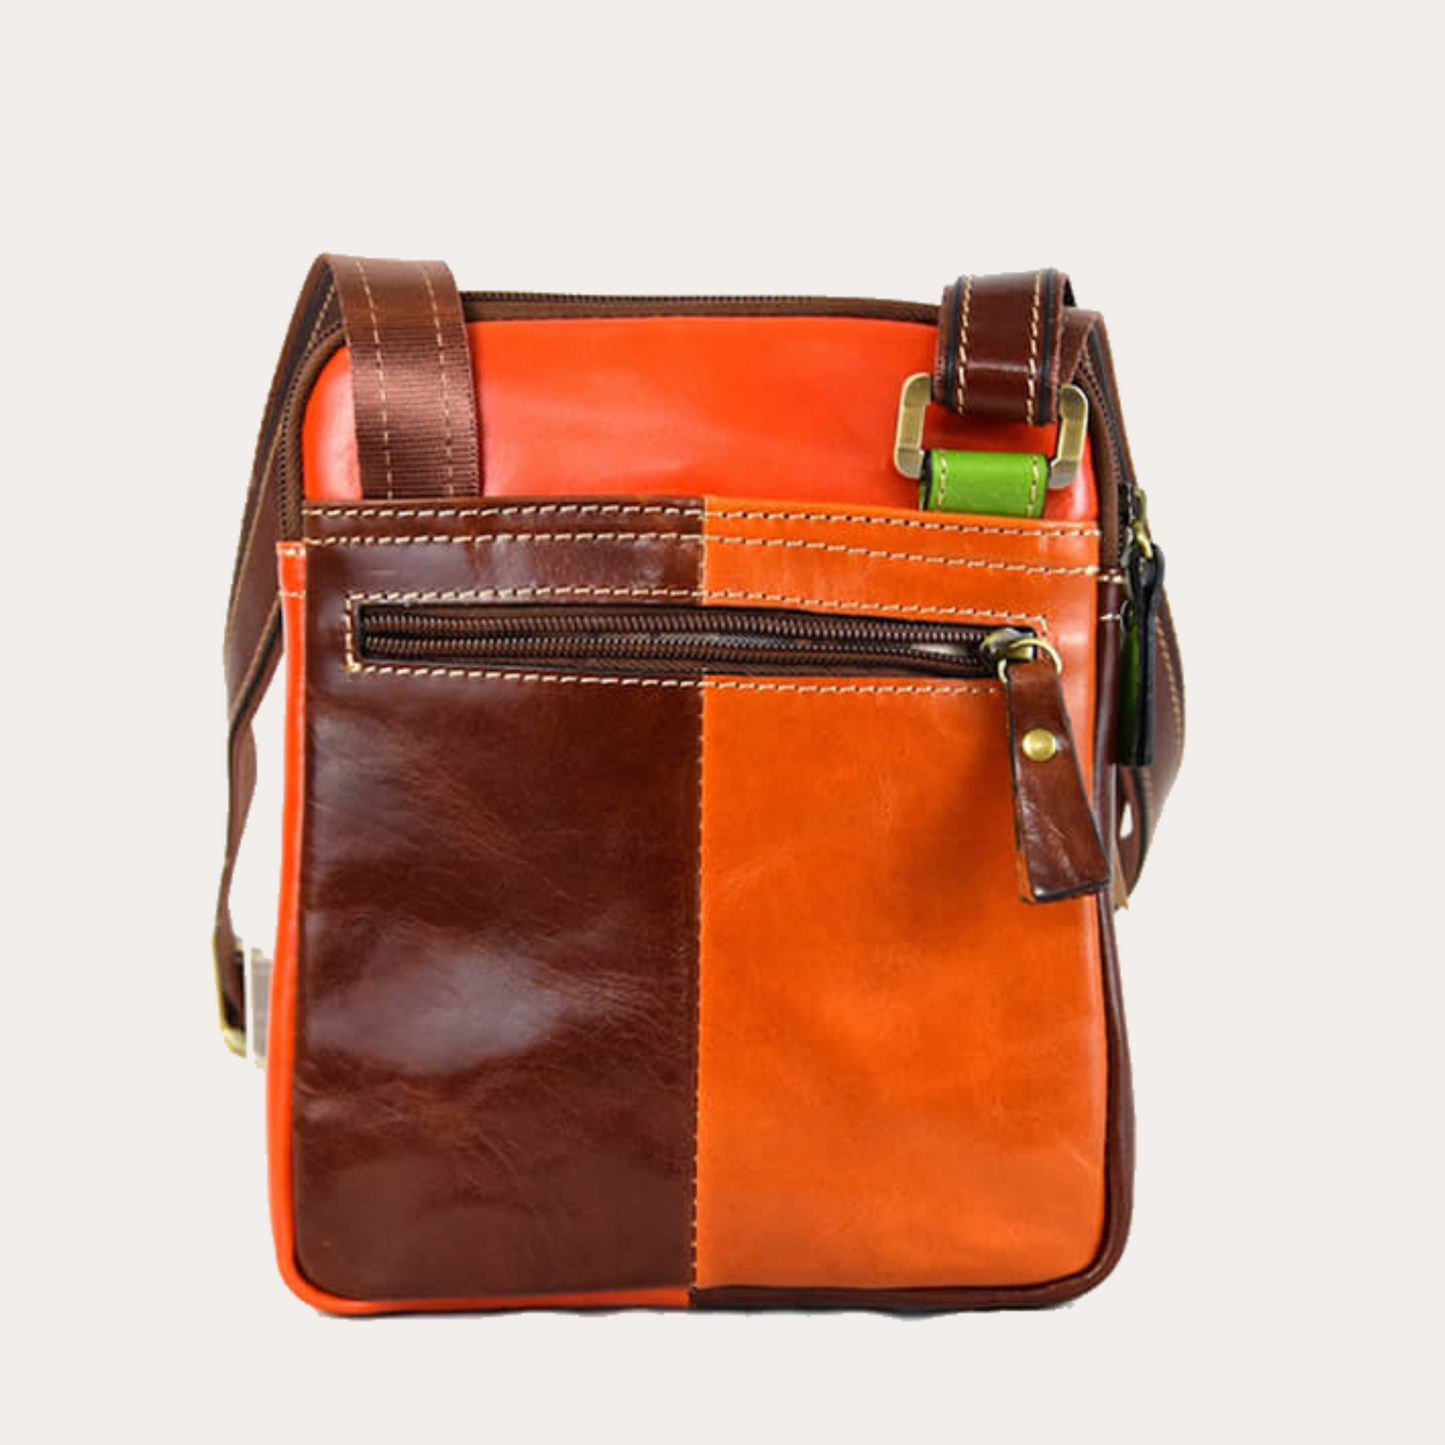 Multi-Colour Leather Shoulder Bag